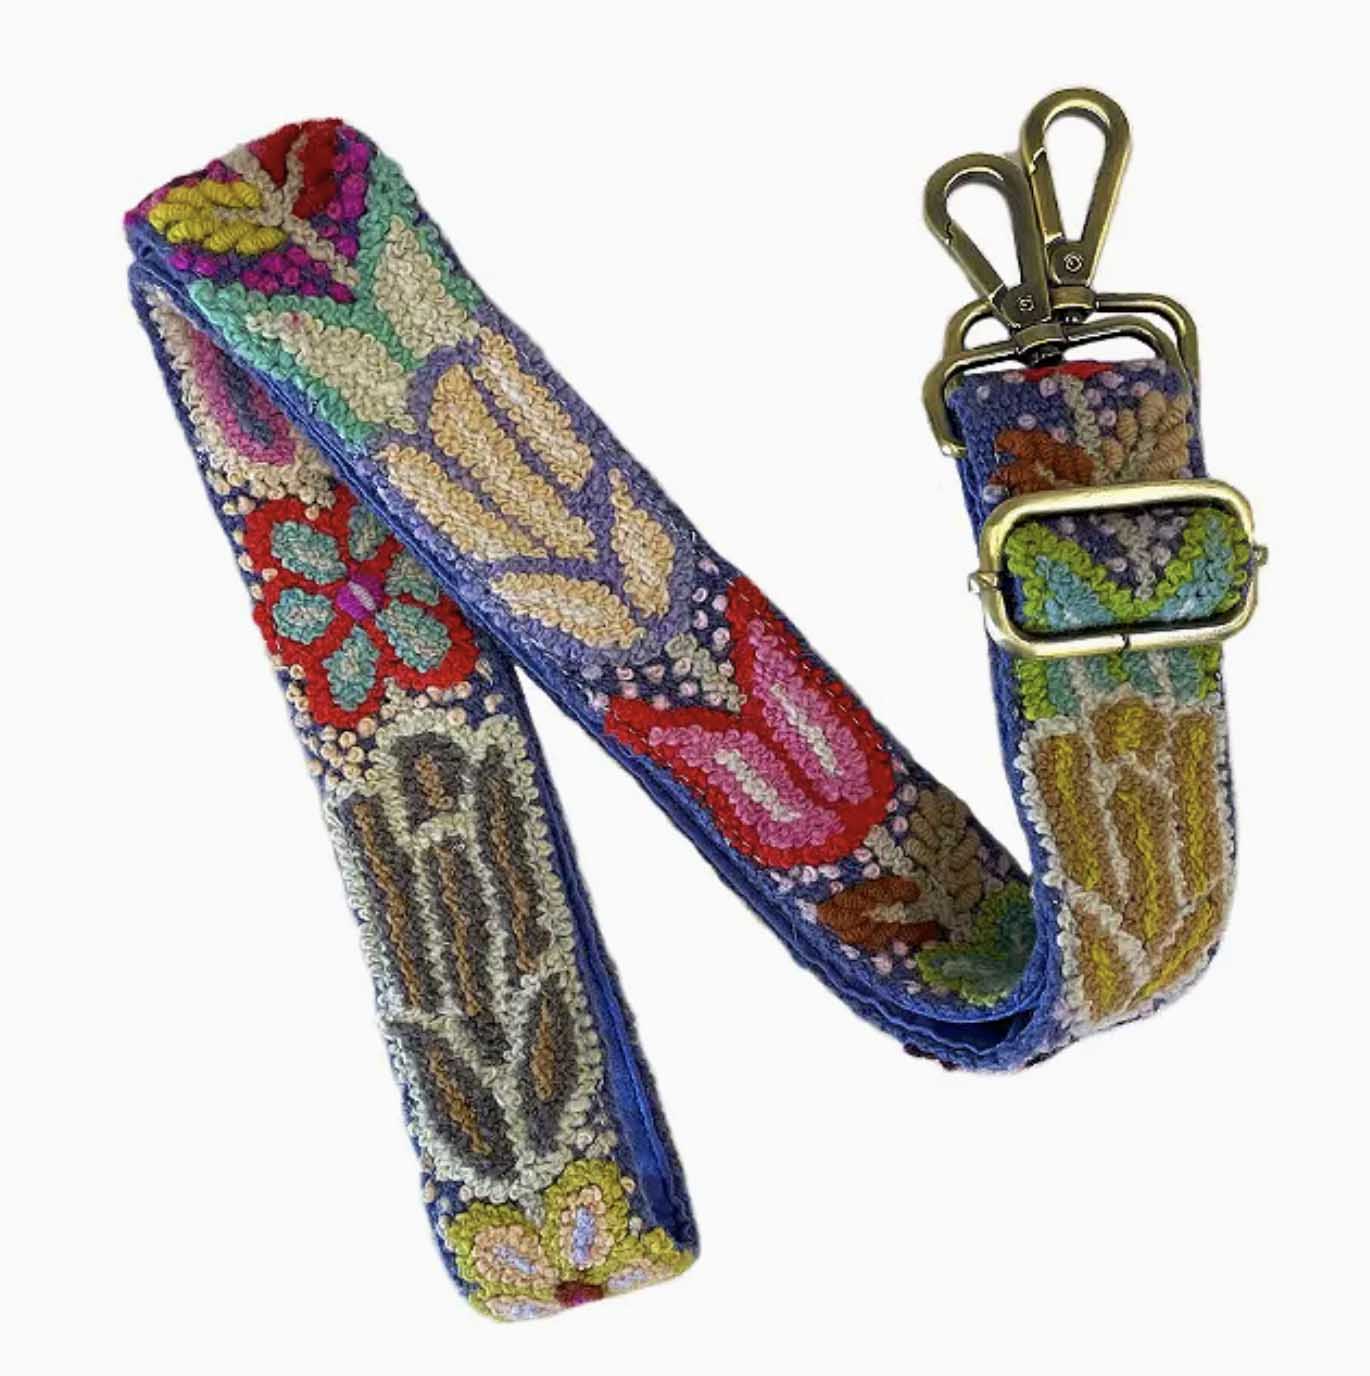 Jenny Kraus Folklorica Embroidered Adjustable Purse Strap